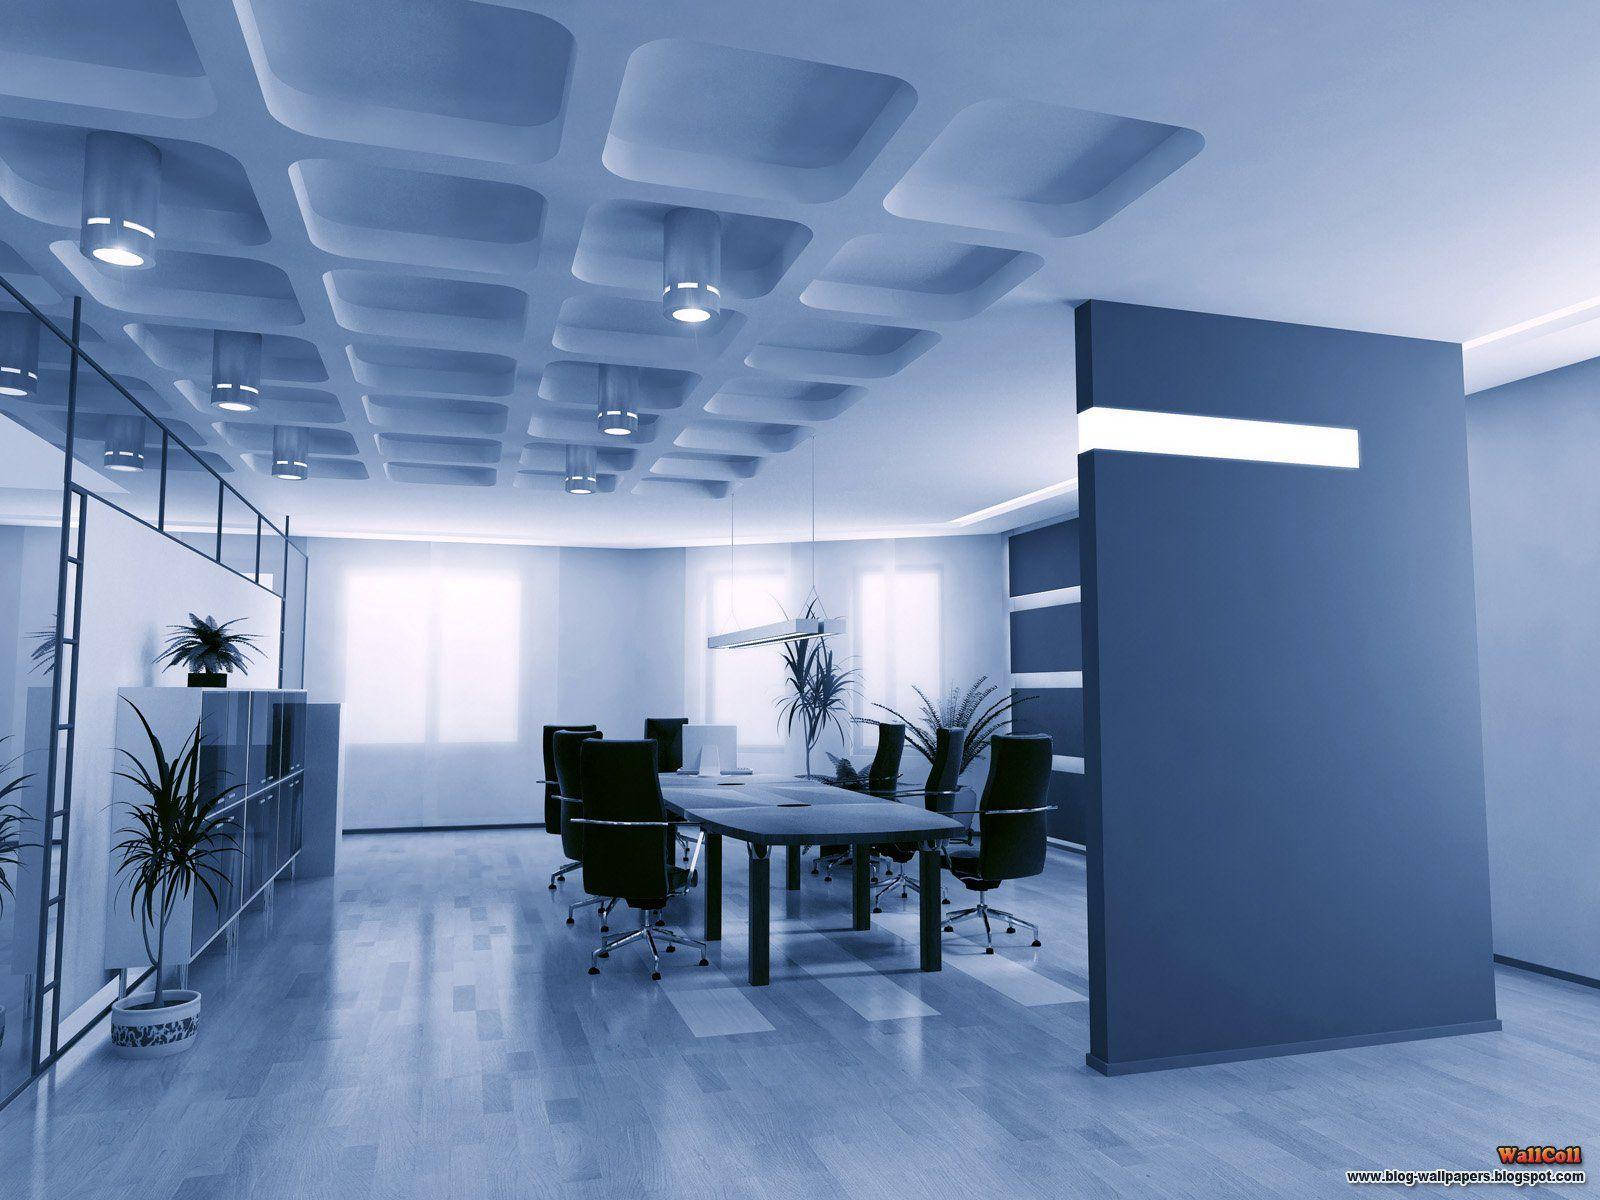 Boardroom Meeting Area Interior Design Picture